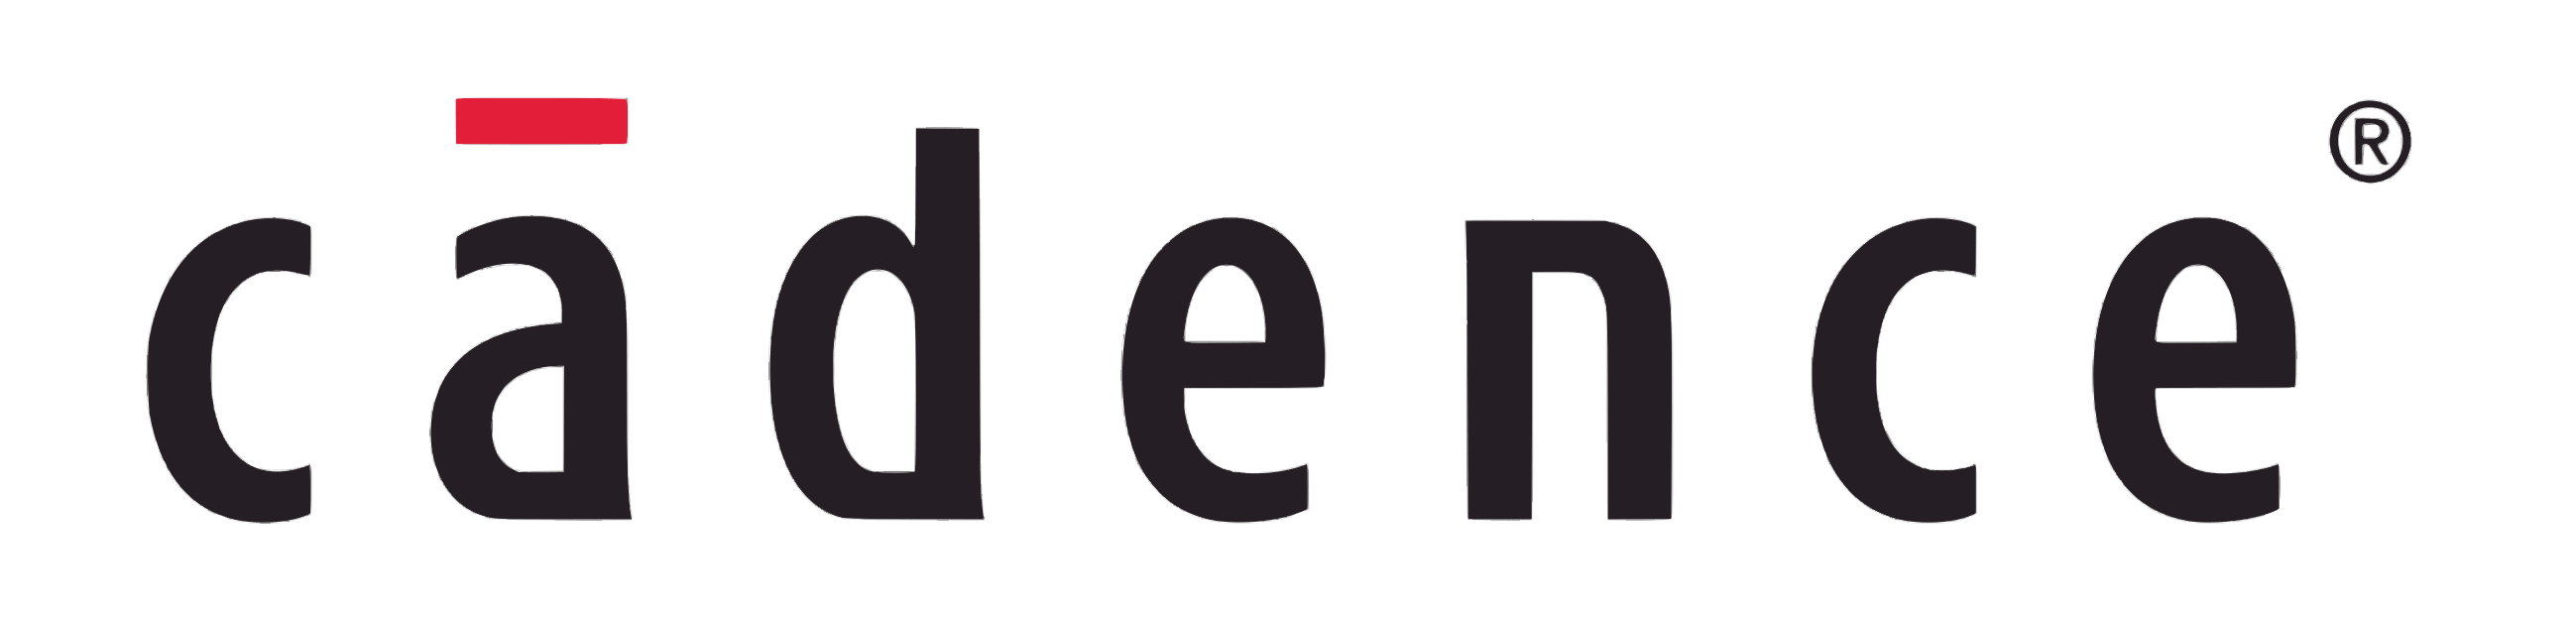 cadence_logo